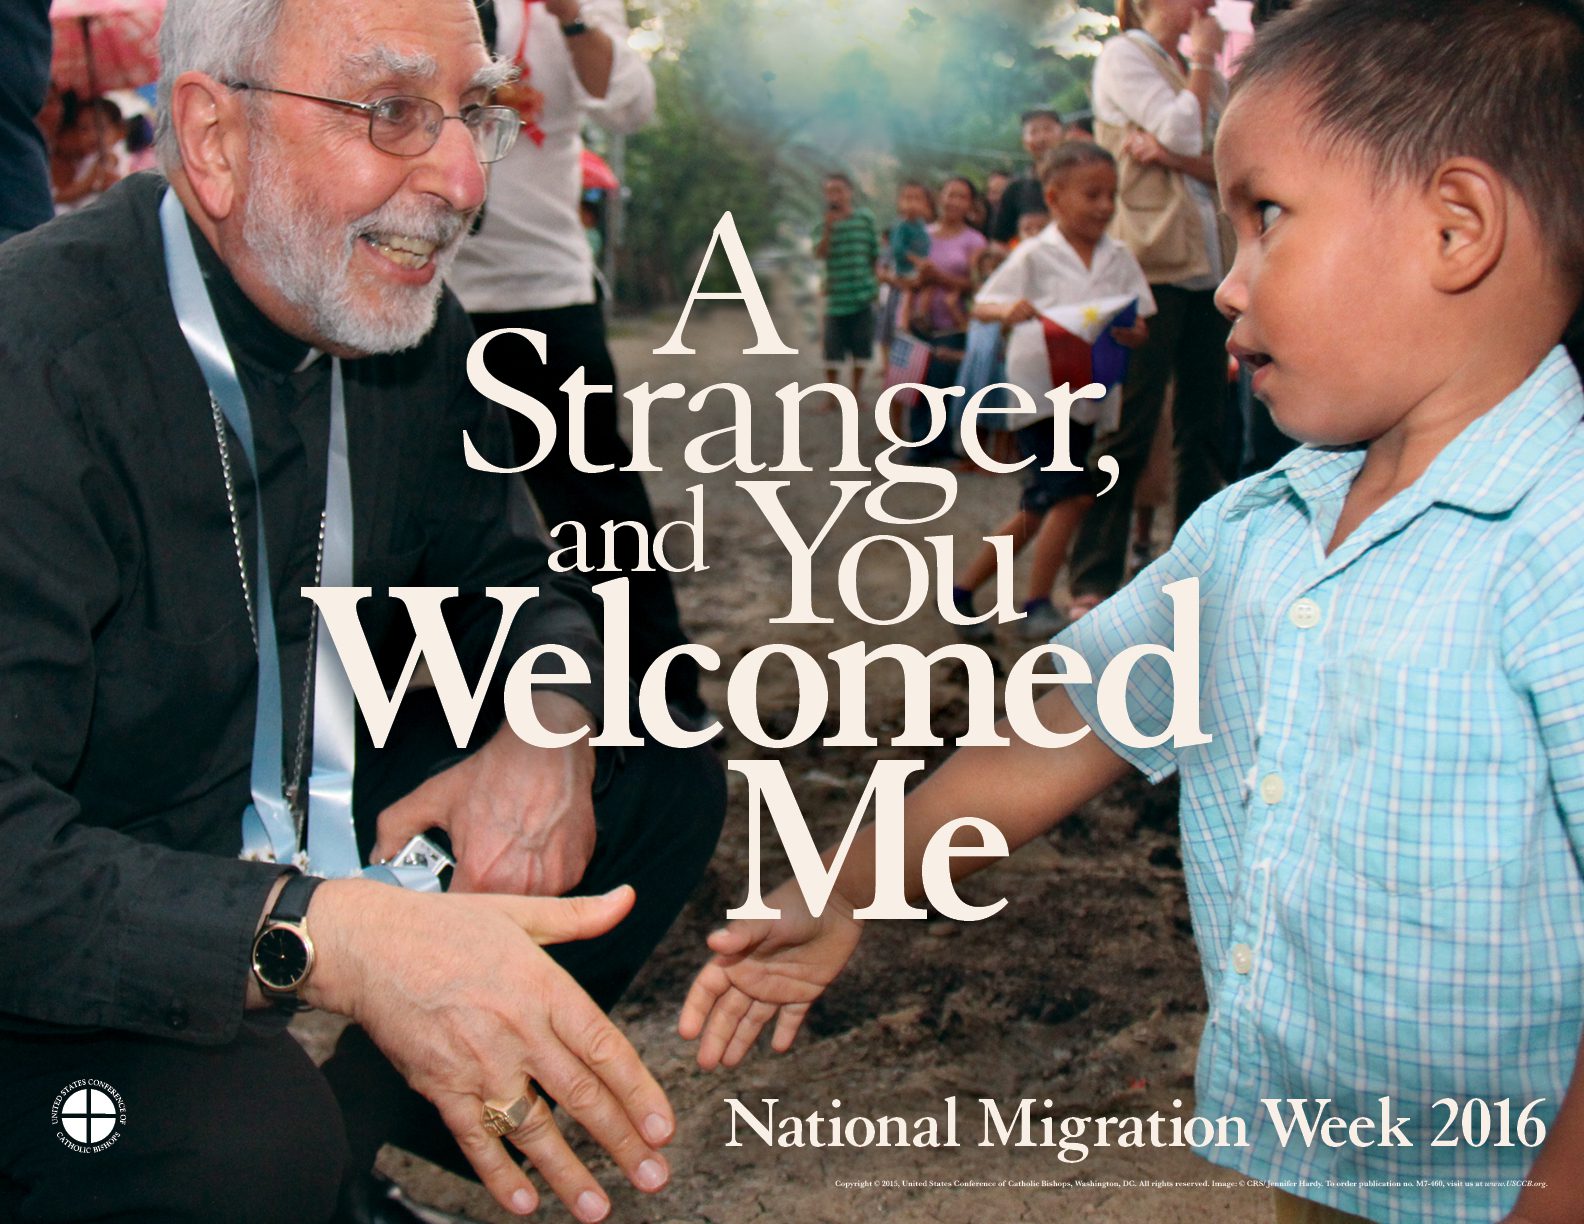 A Stranger and you welcomed me – National Migration Week 2016